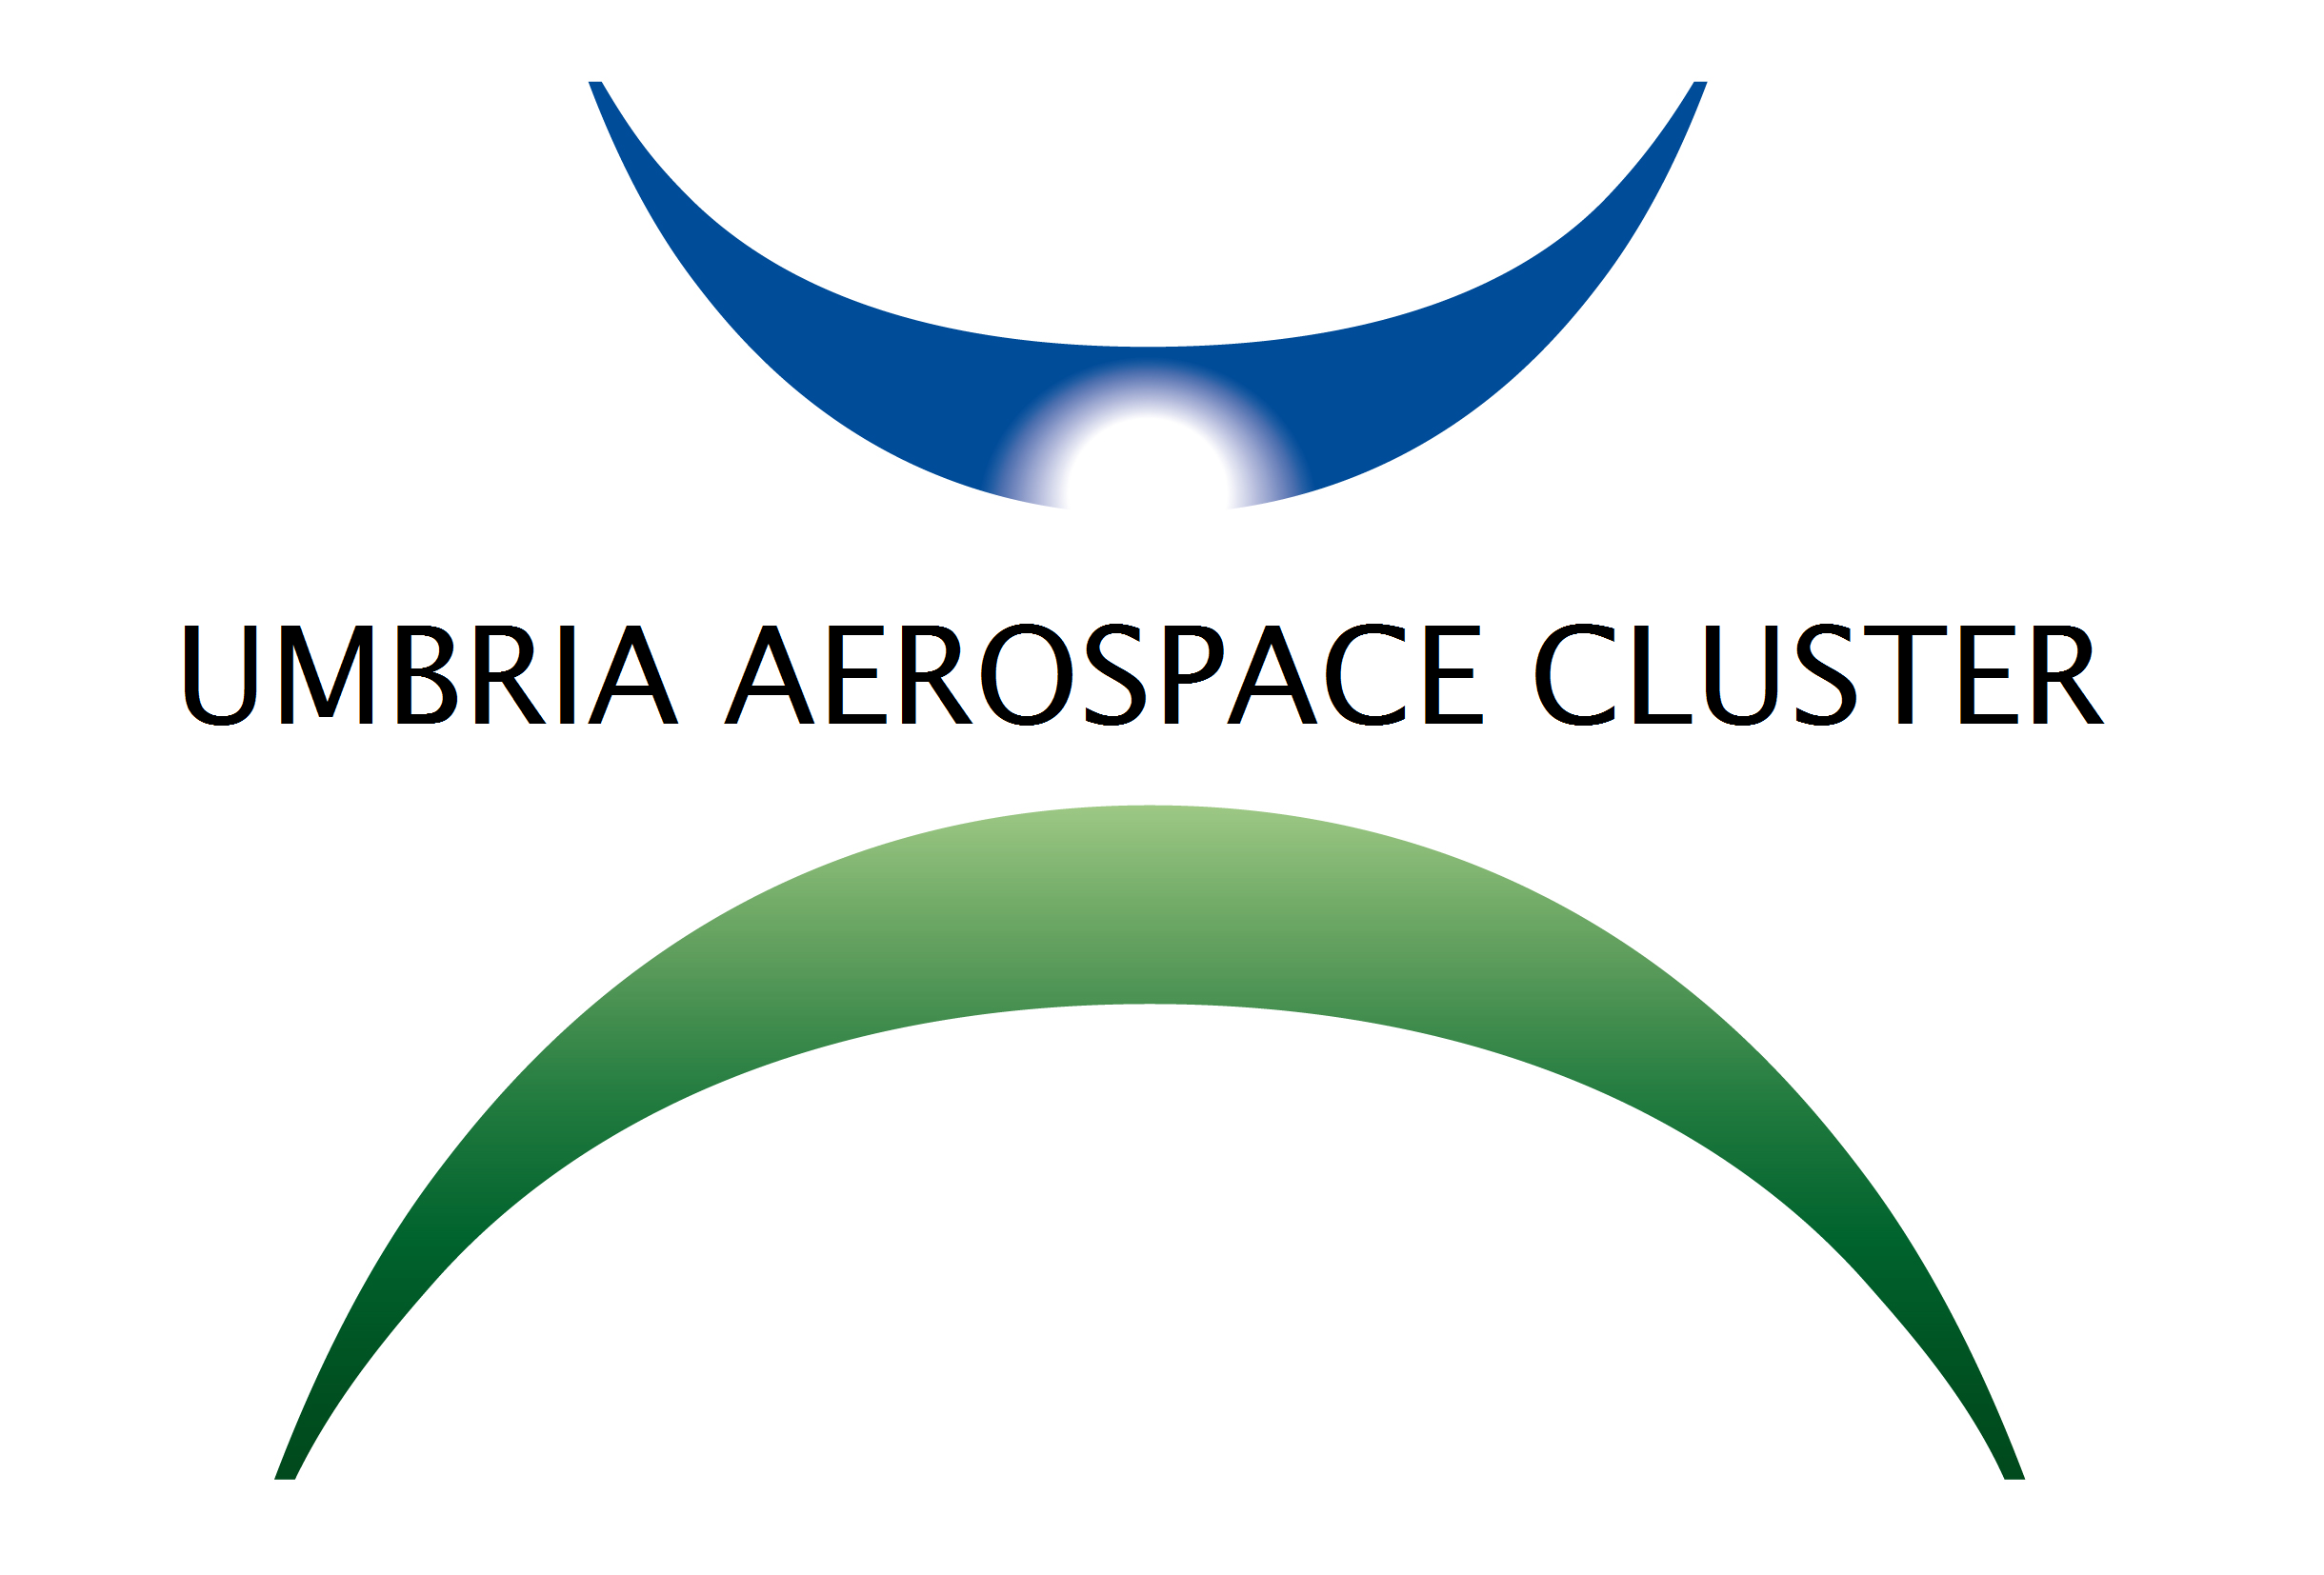 Cluster Umbria Aerospace logo_150dpi (002)